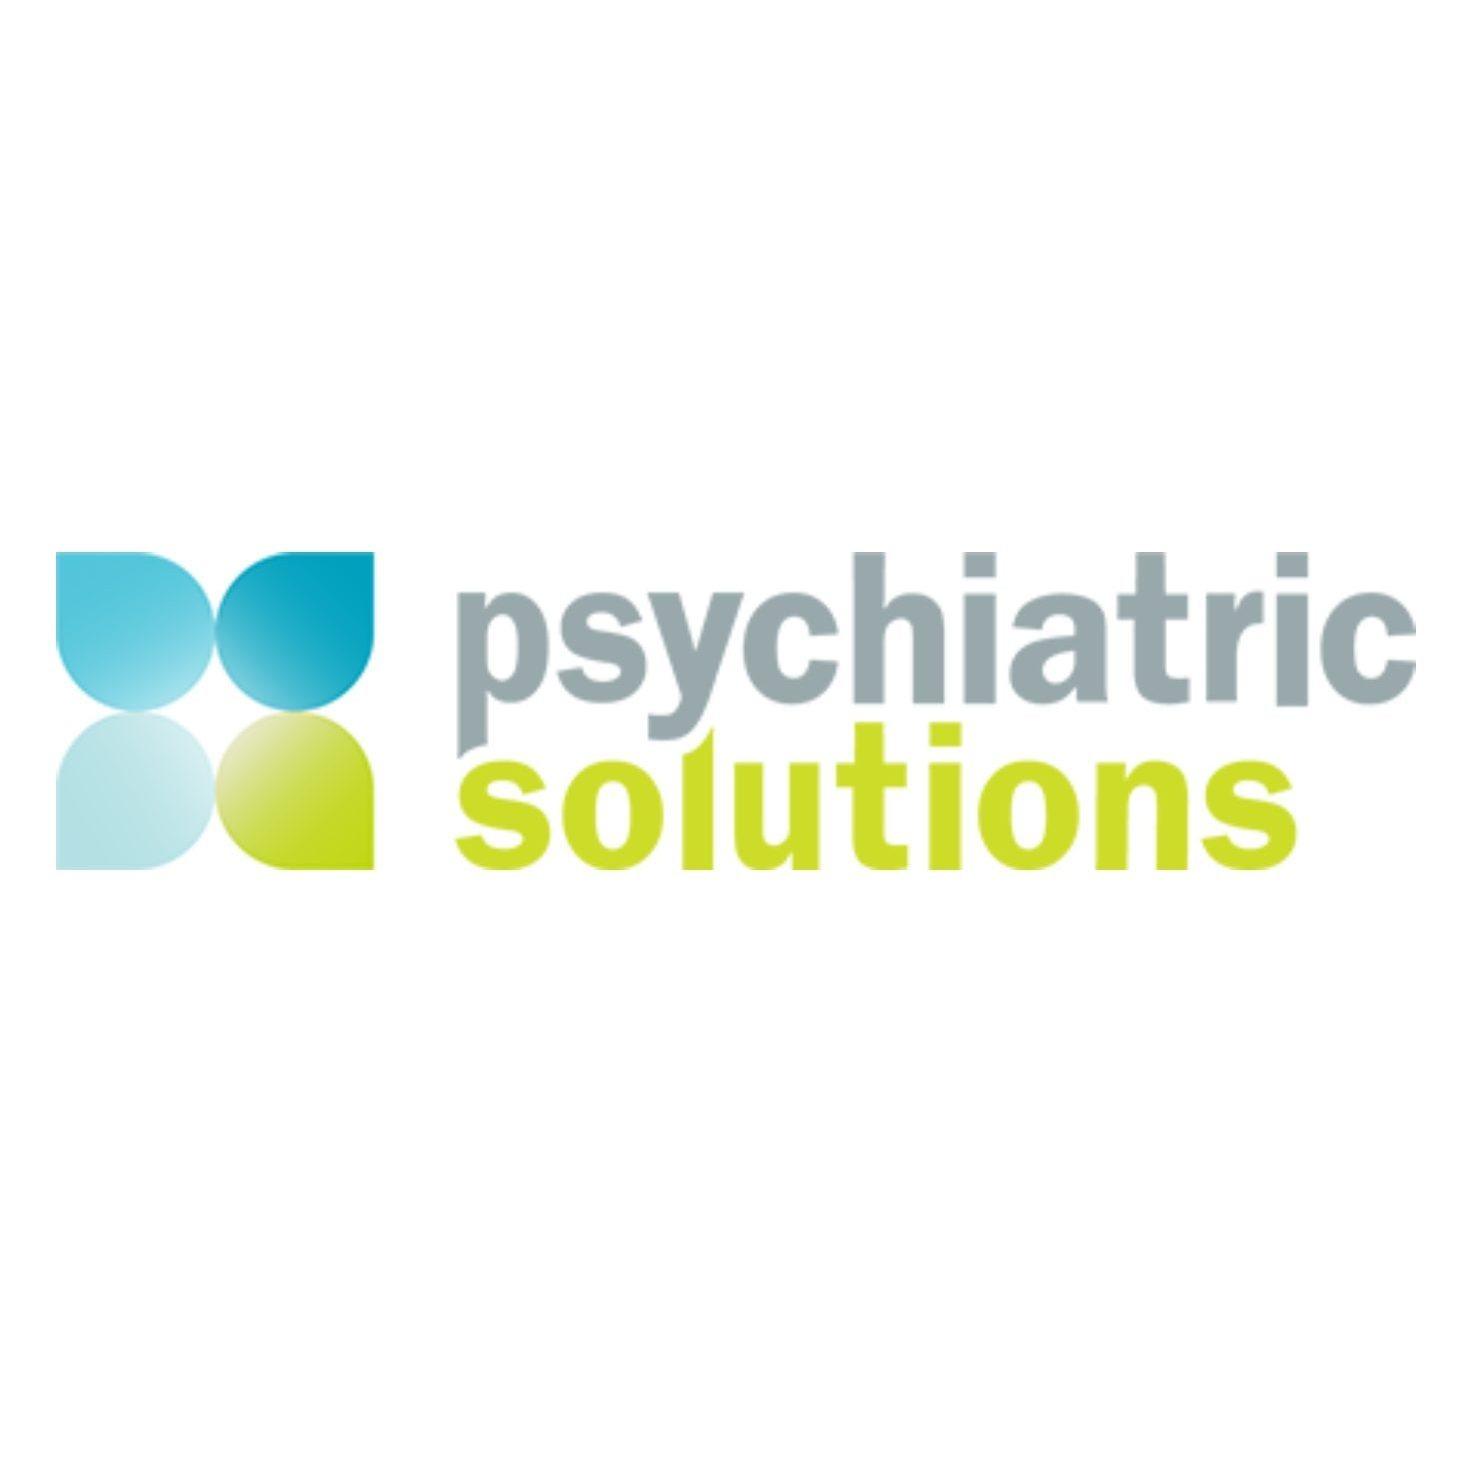 Psychiatric Solutions 1620 N Mamer Rd building b-100 Spokane Valley, WA ...